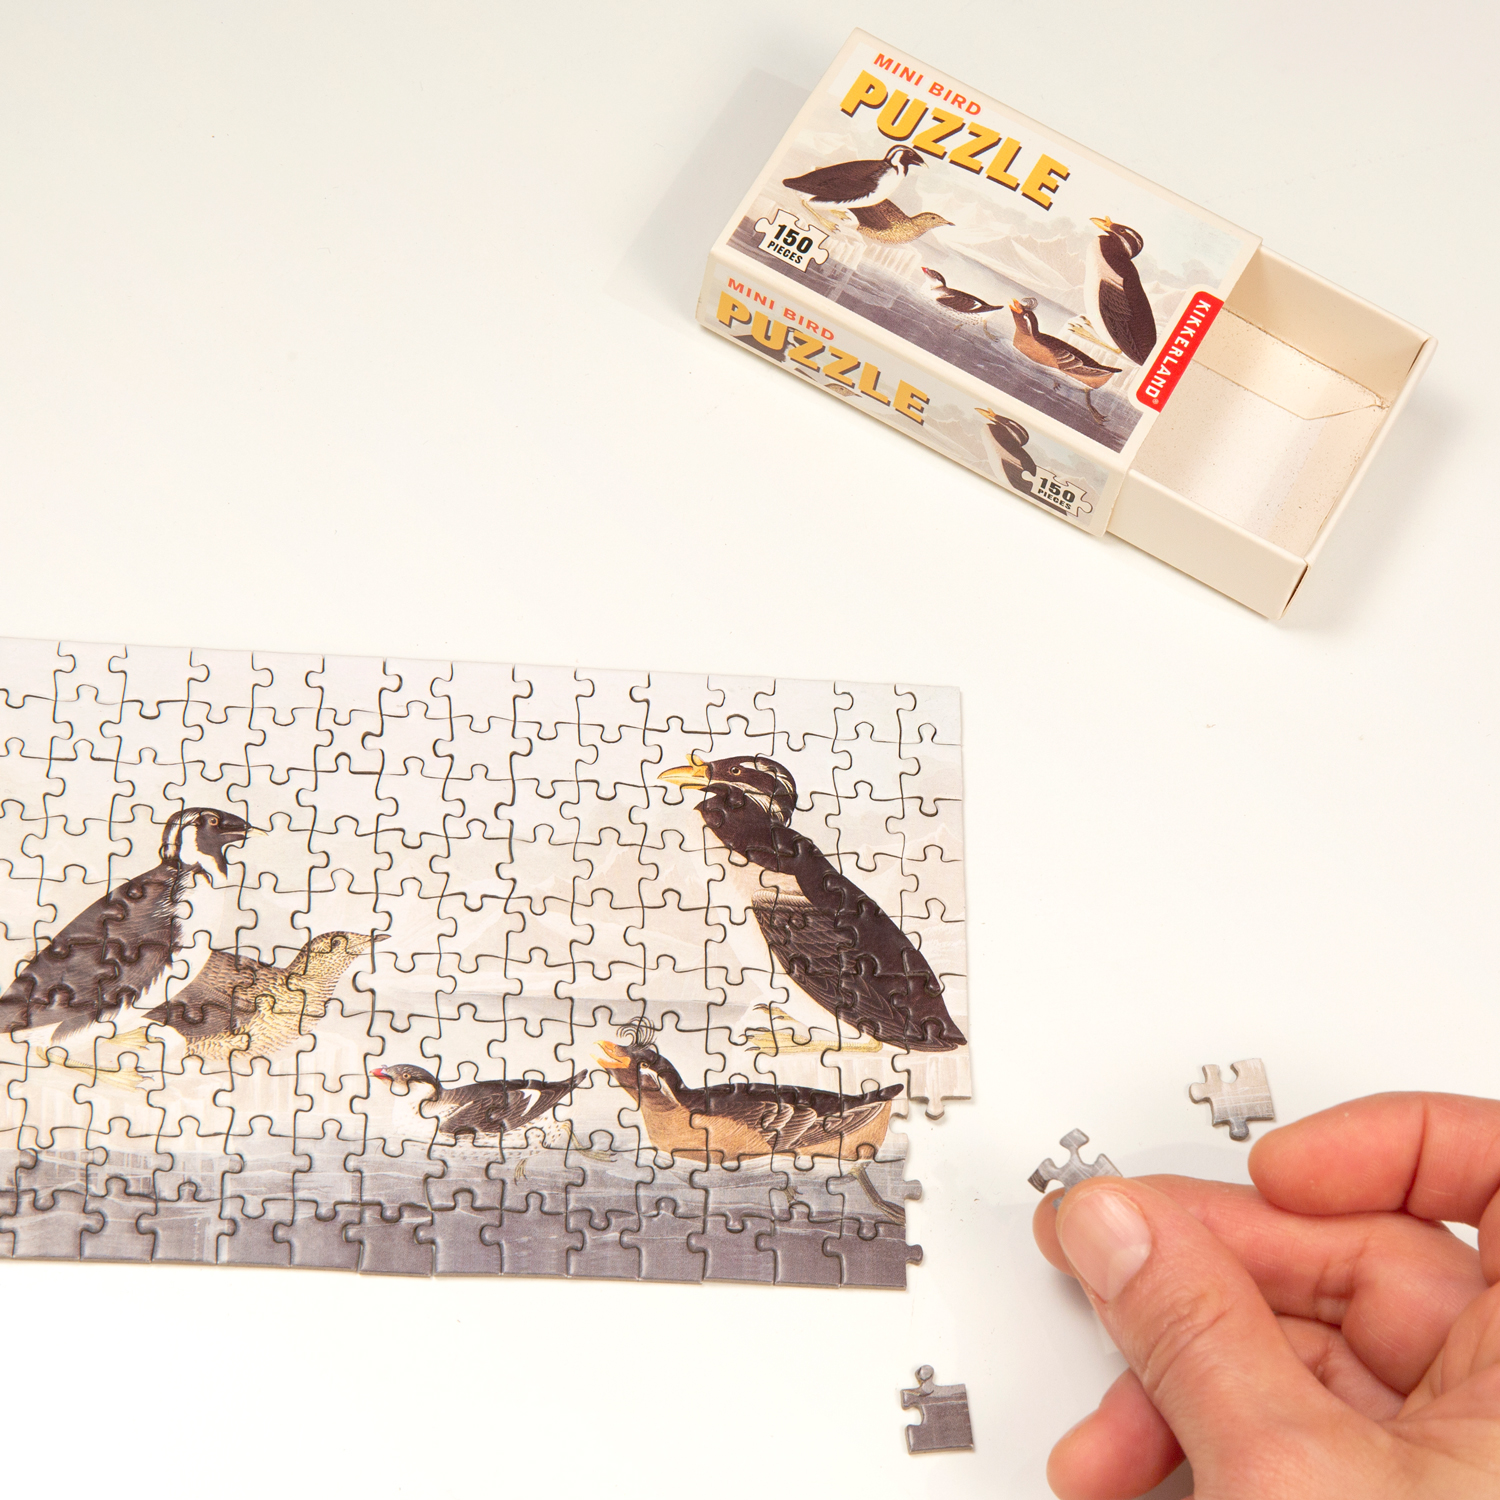 Mini bird puzzle watervogels